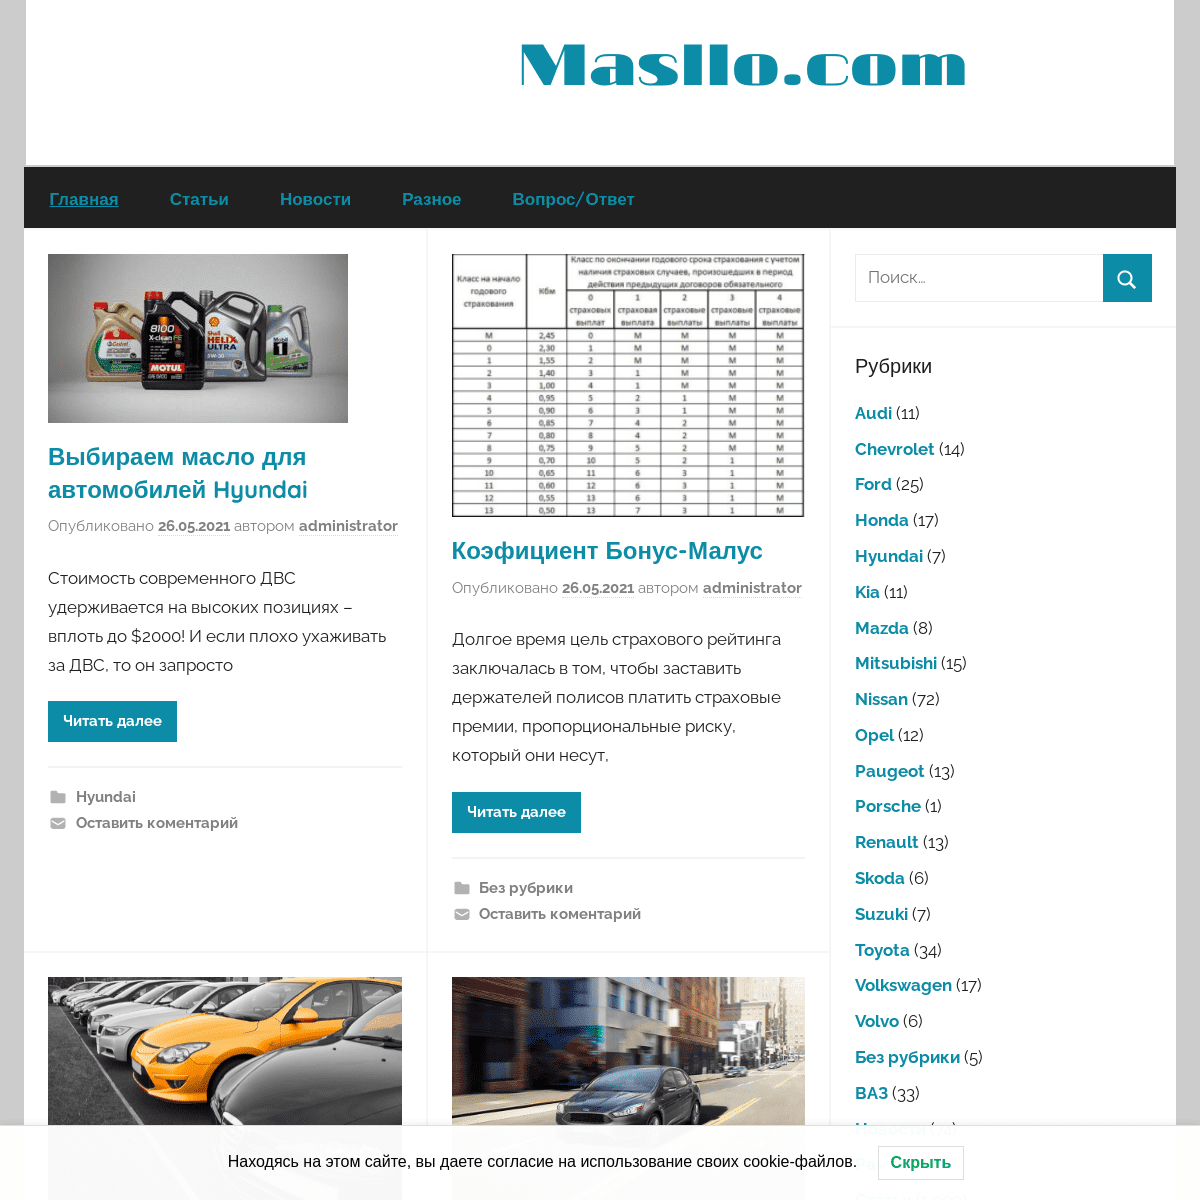 A complete backup of https://masllo.com